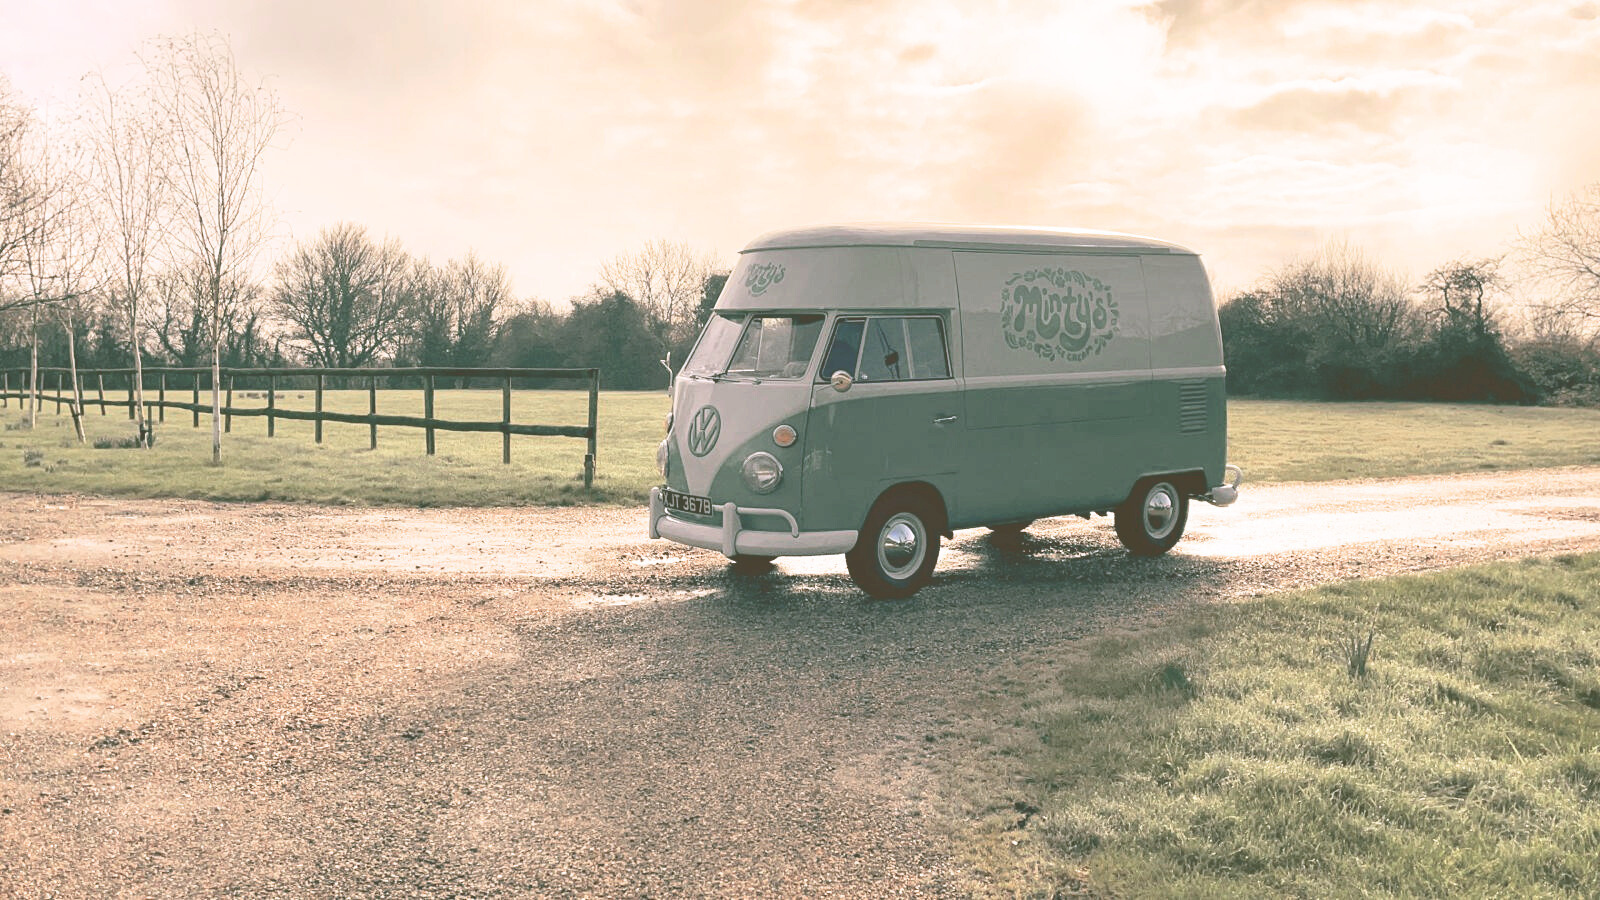 Minty's ice cream vintage vw Volkswagen van on the Essex, Suffolk border driving towards a wedding event